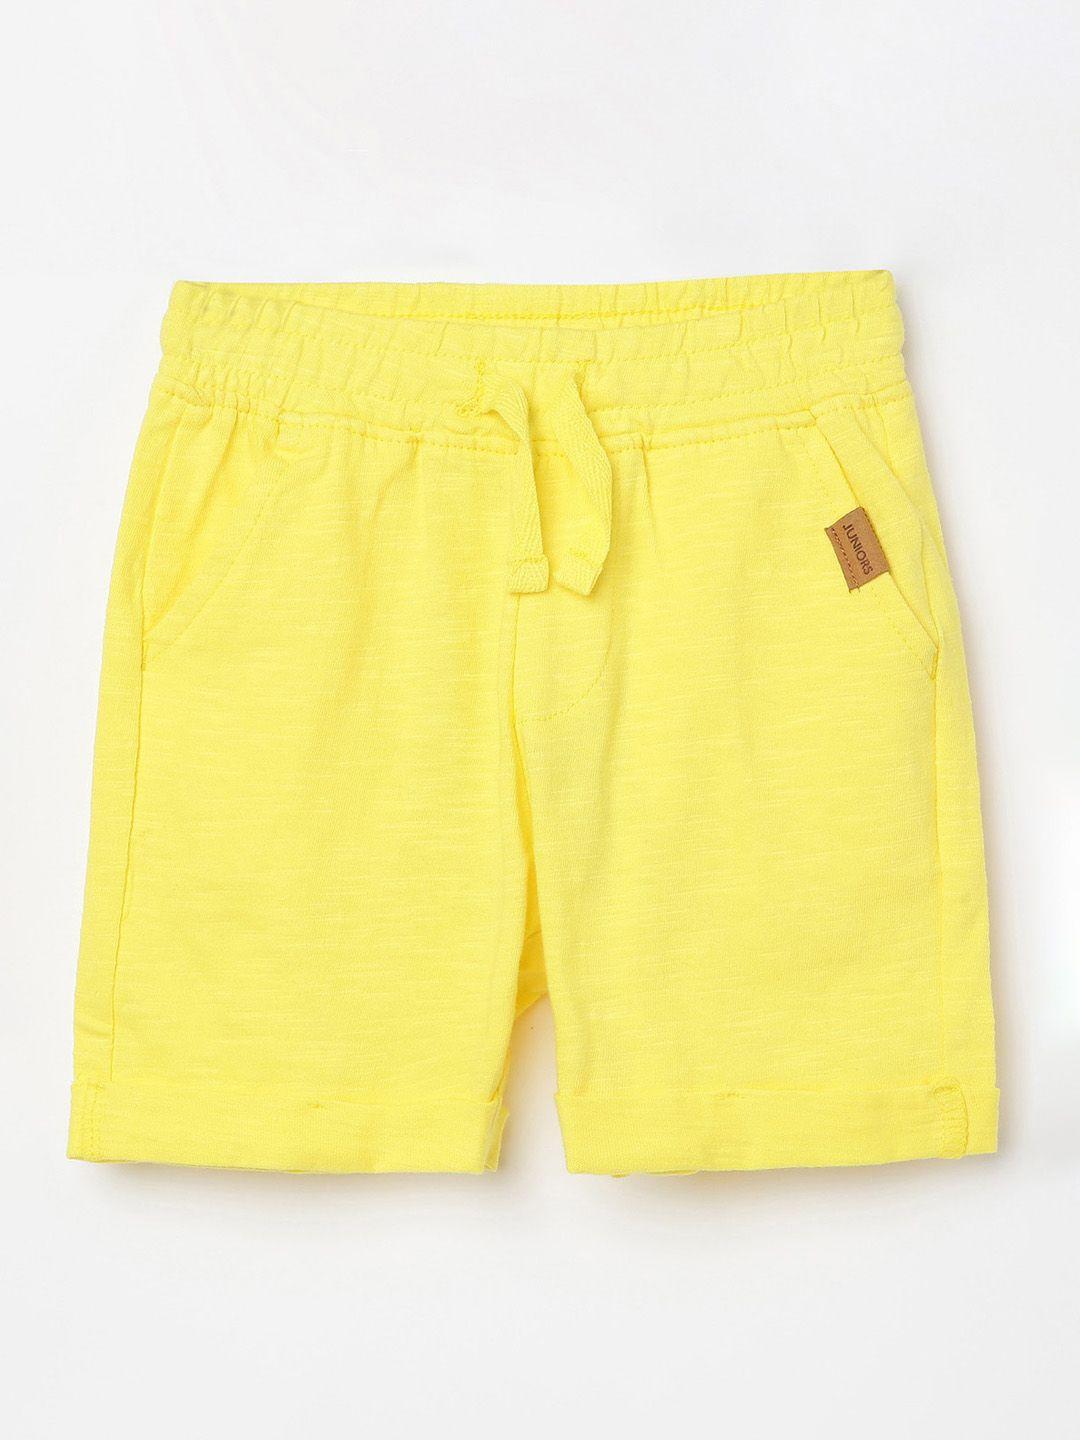 juniors boys yellow shorts